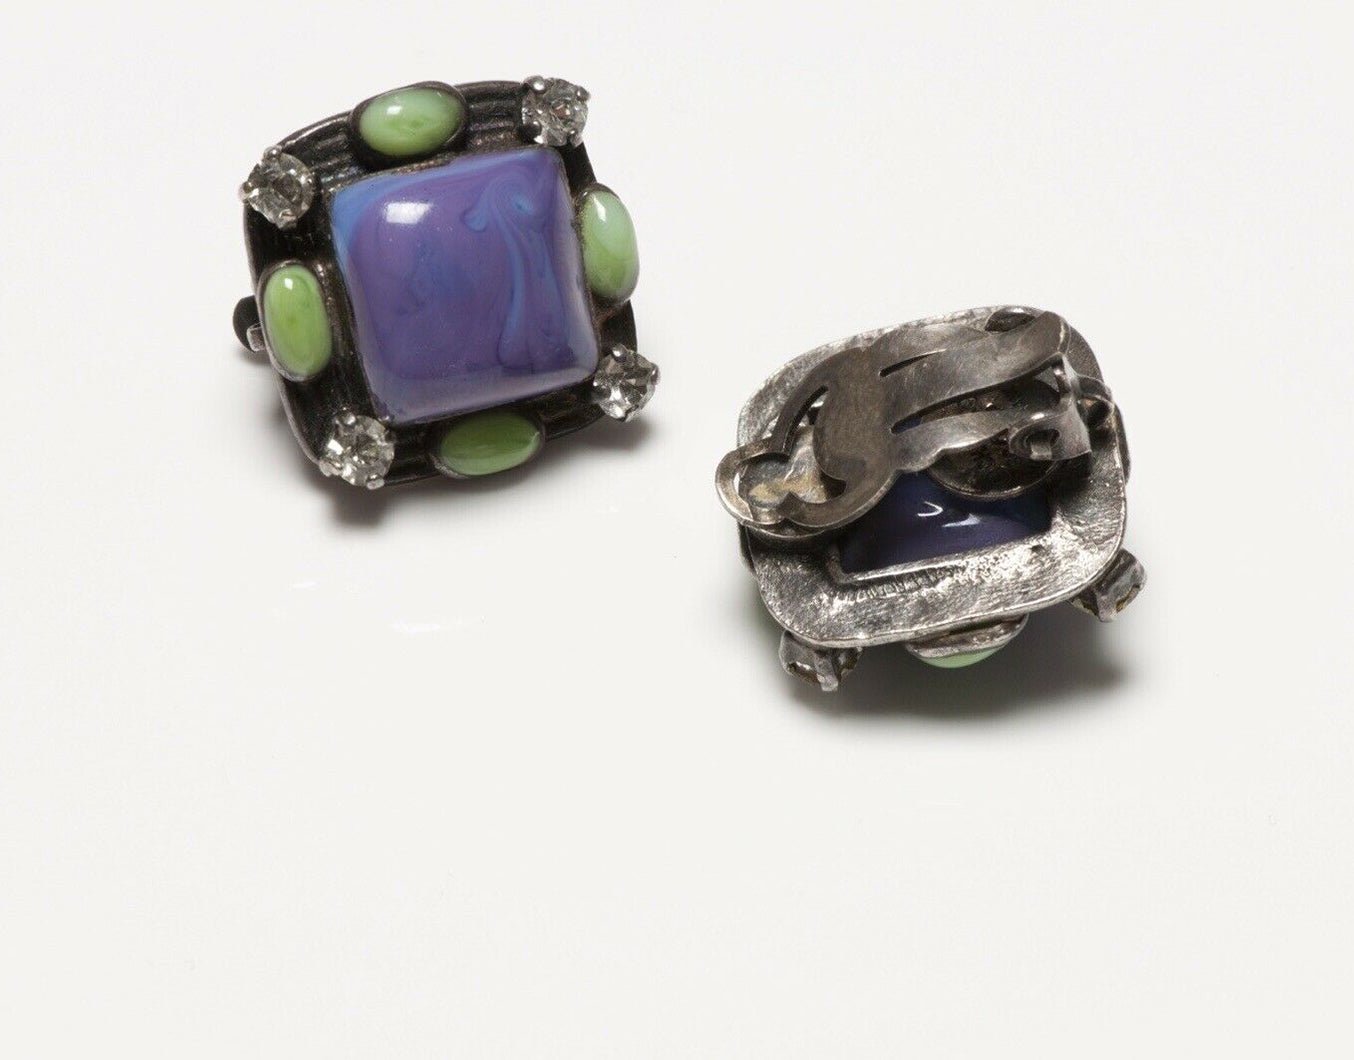 CHANEL Spring 1996 Gripoix Purple Green Poured Glass Earrings